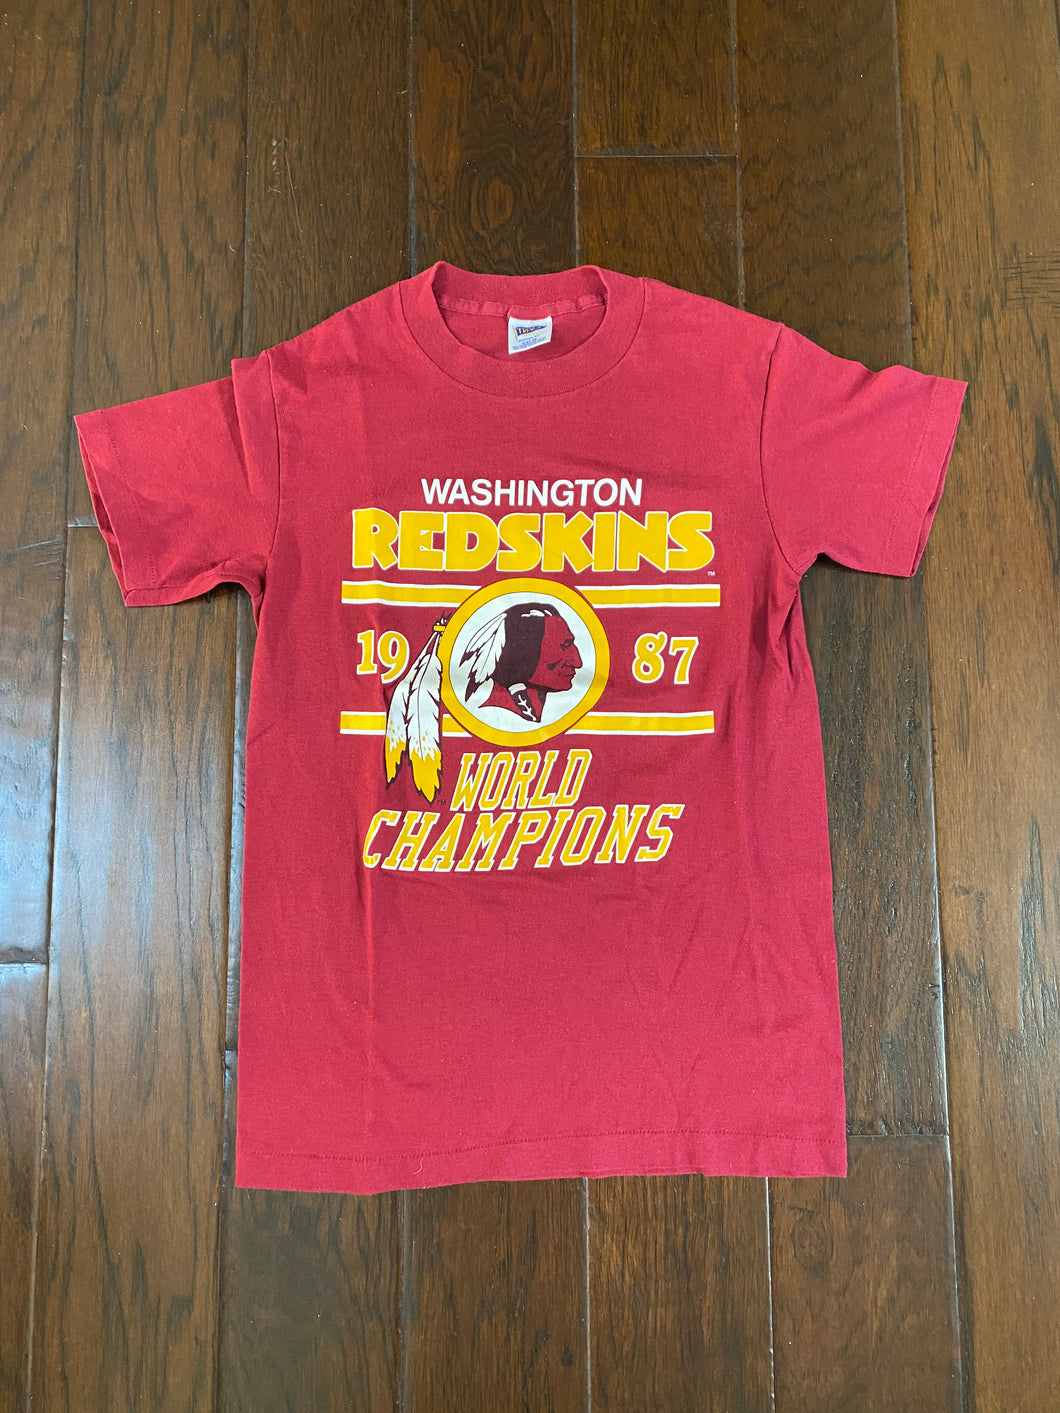 Washington Redskins 1987 “World Champions” Vintage Distressed T-shirt